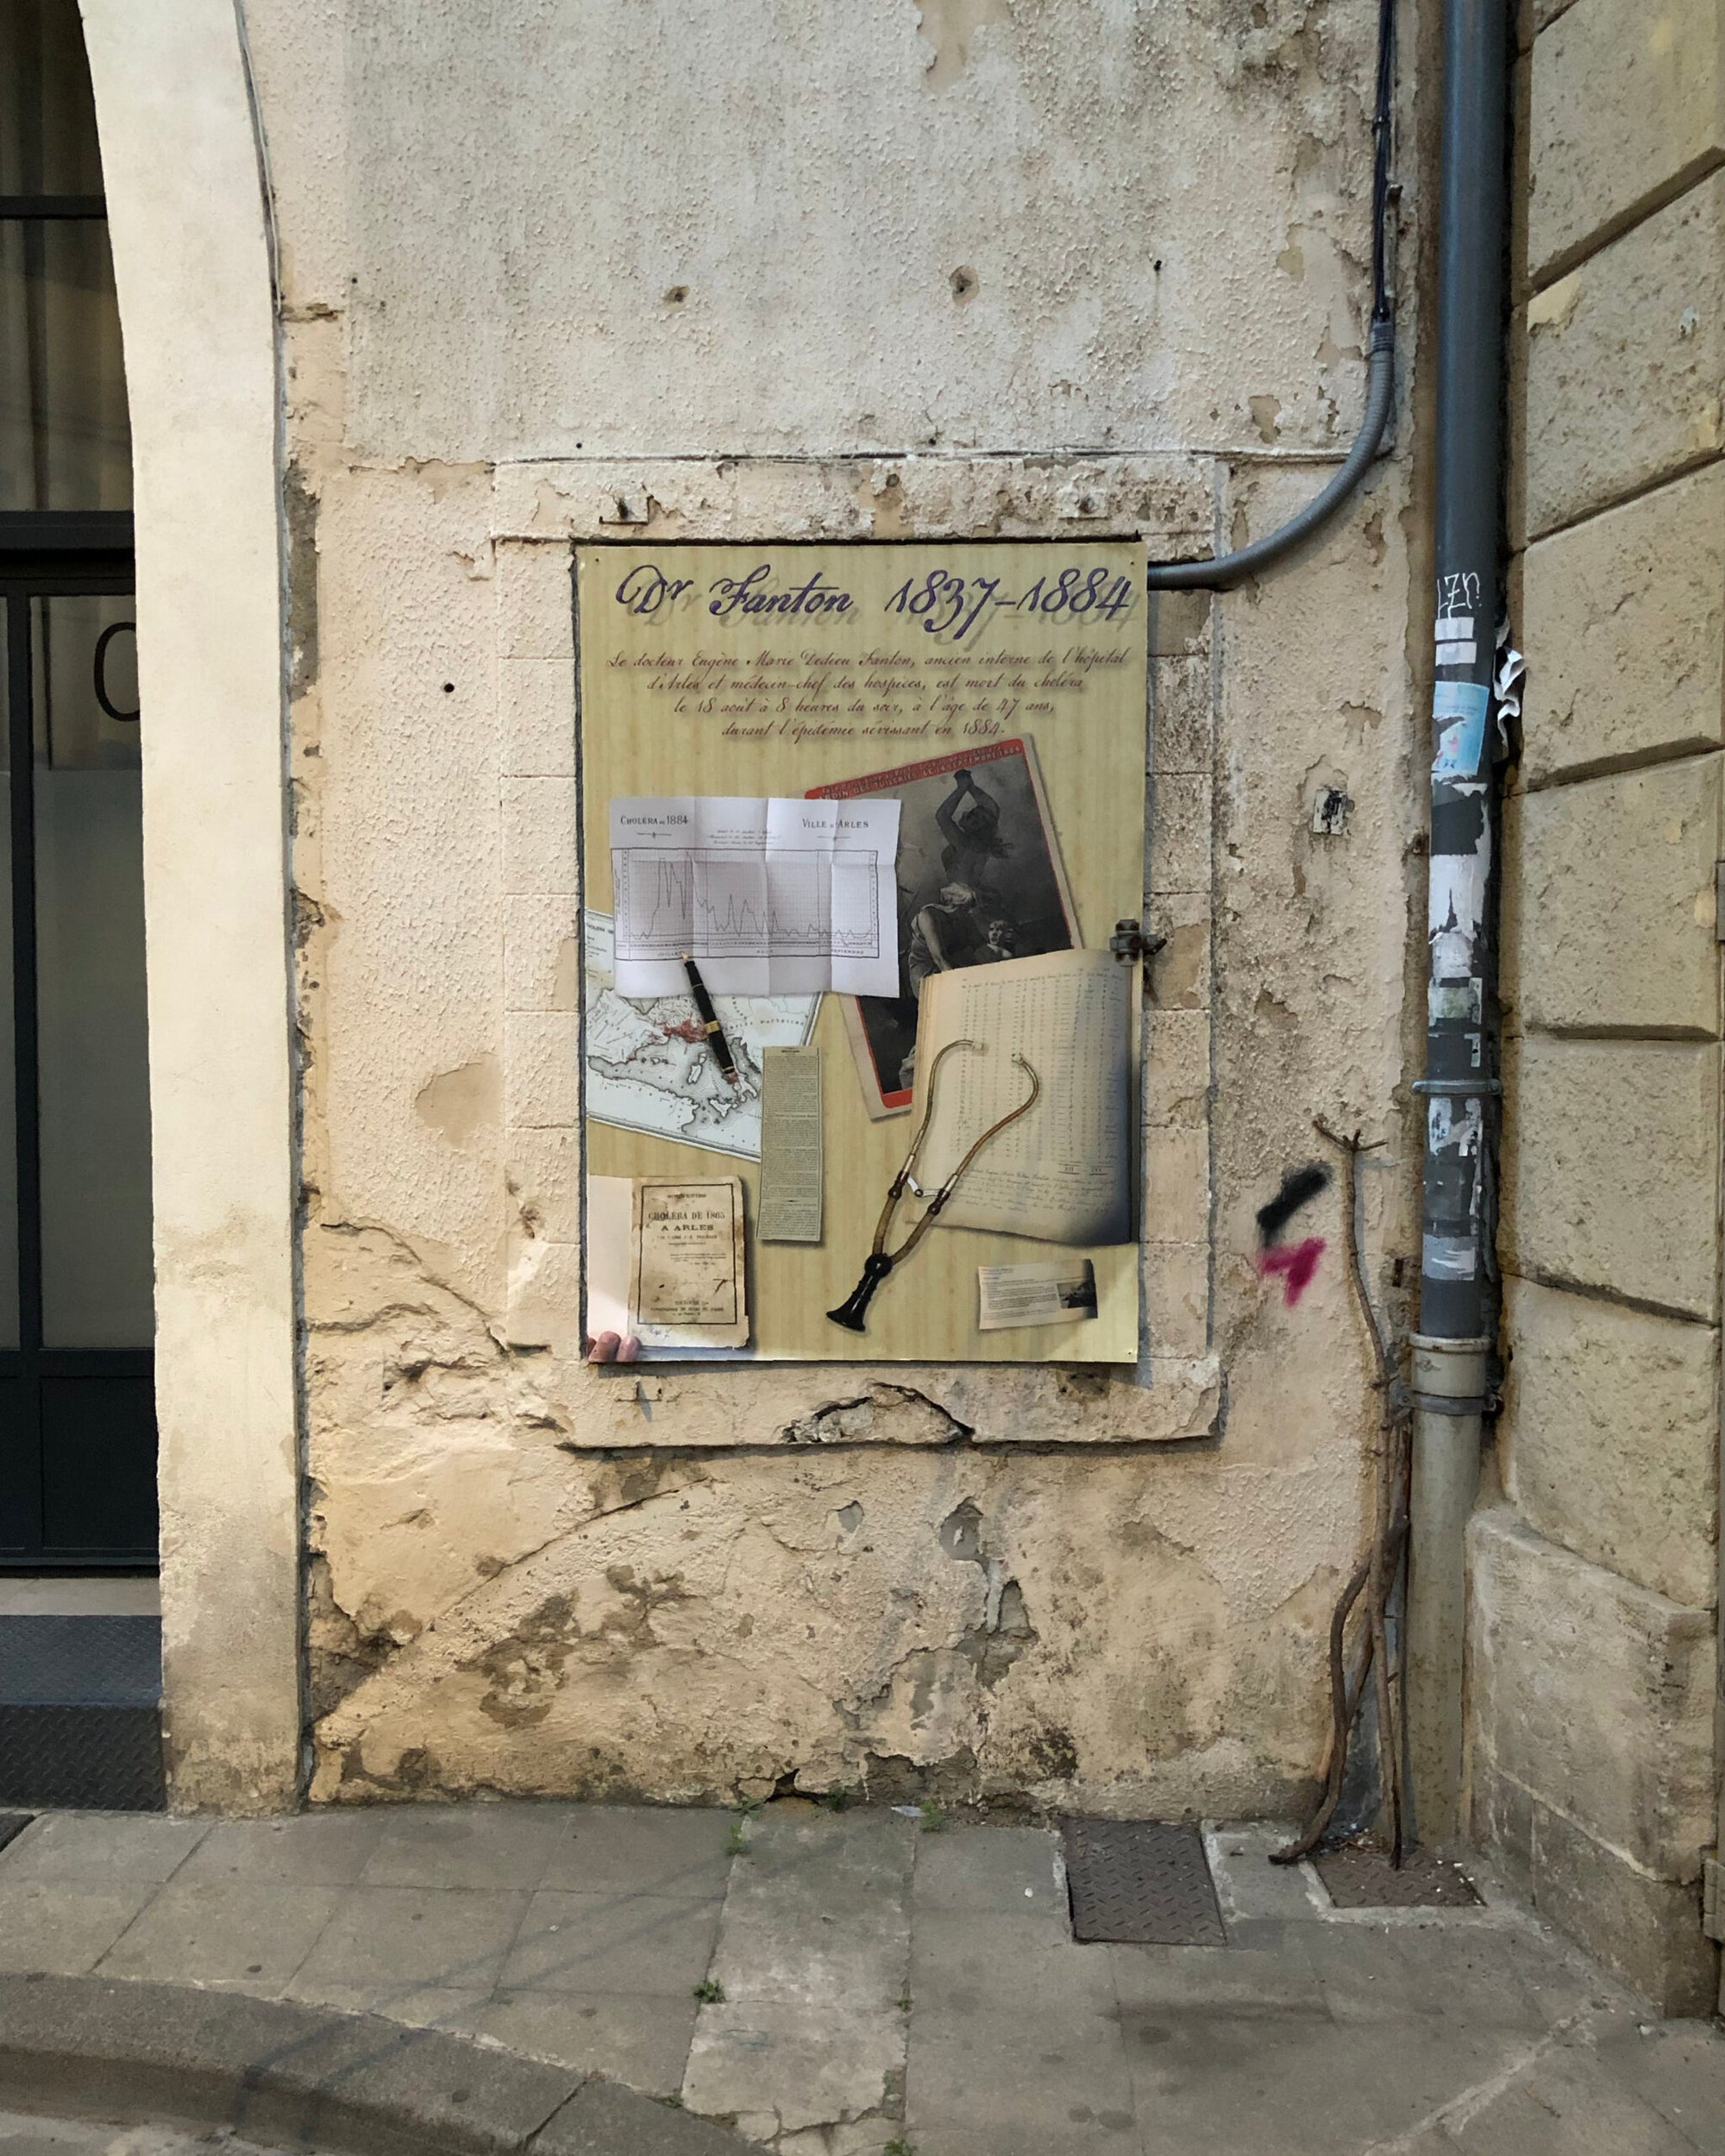 Van Gogh Arles Poster Install